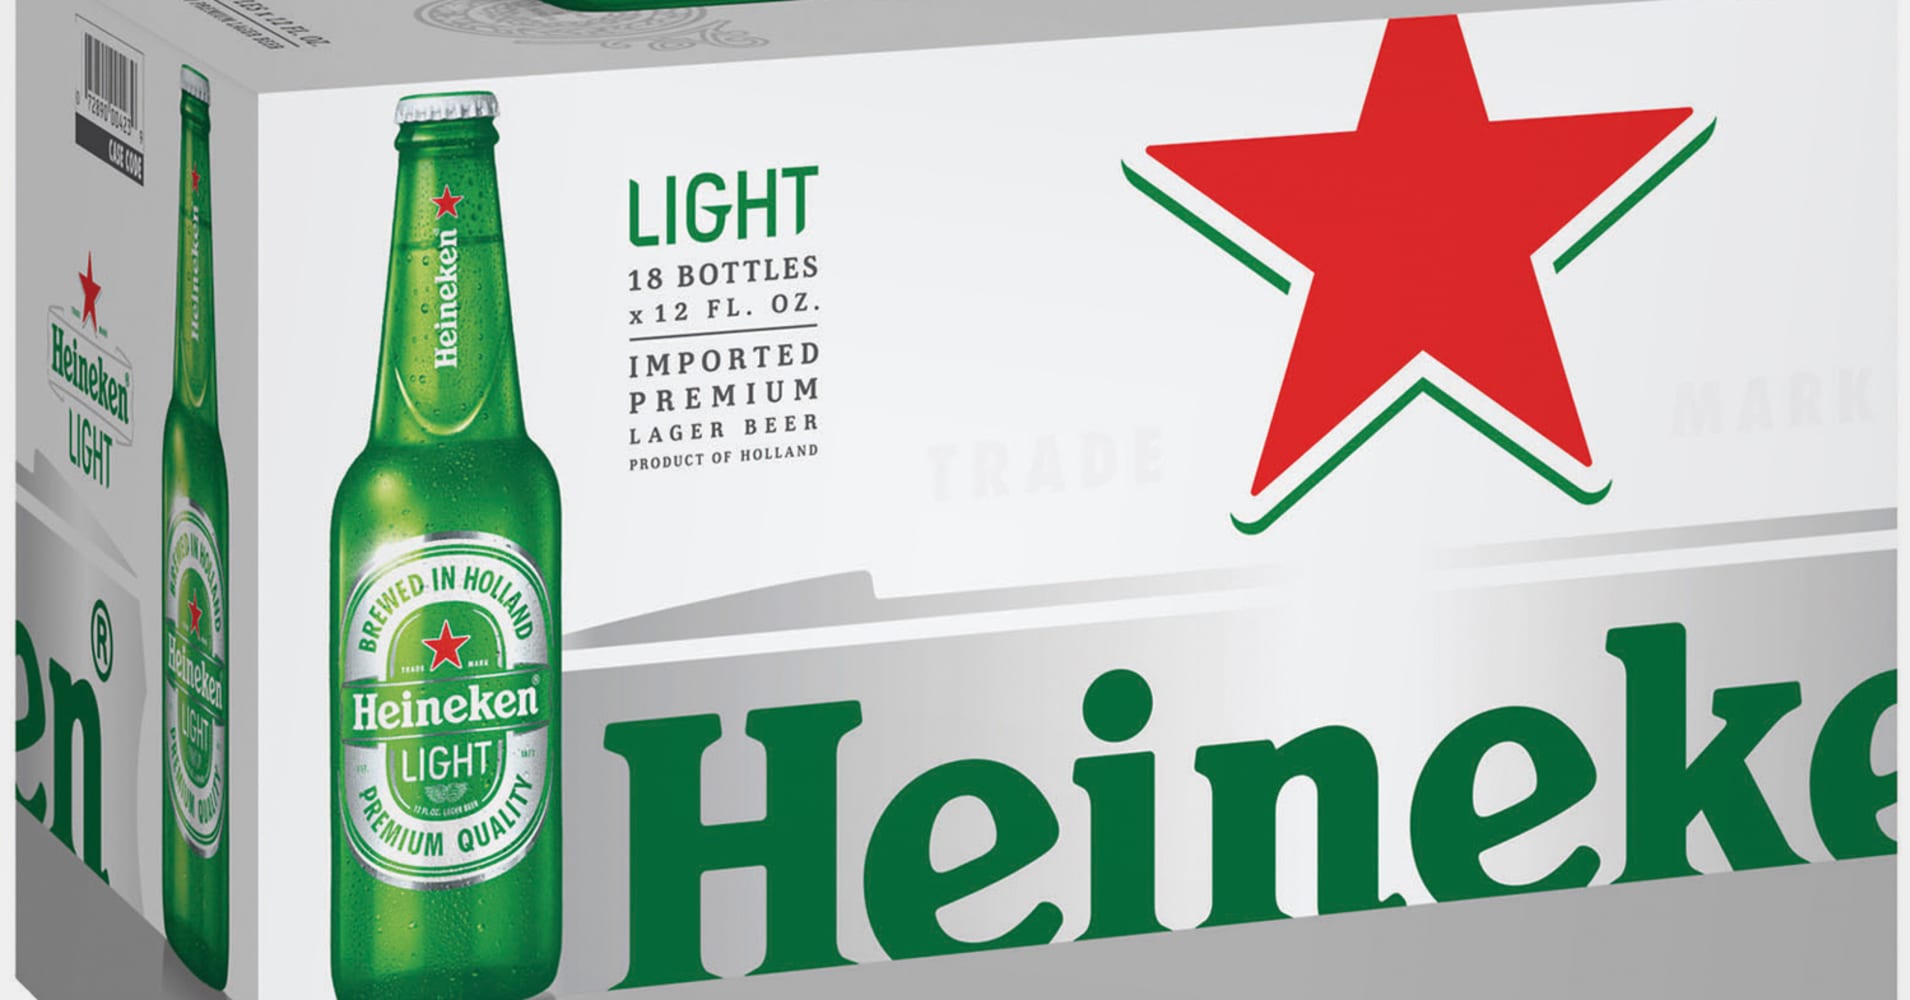 With S Sagging Heineken Light Gets